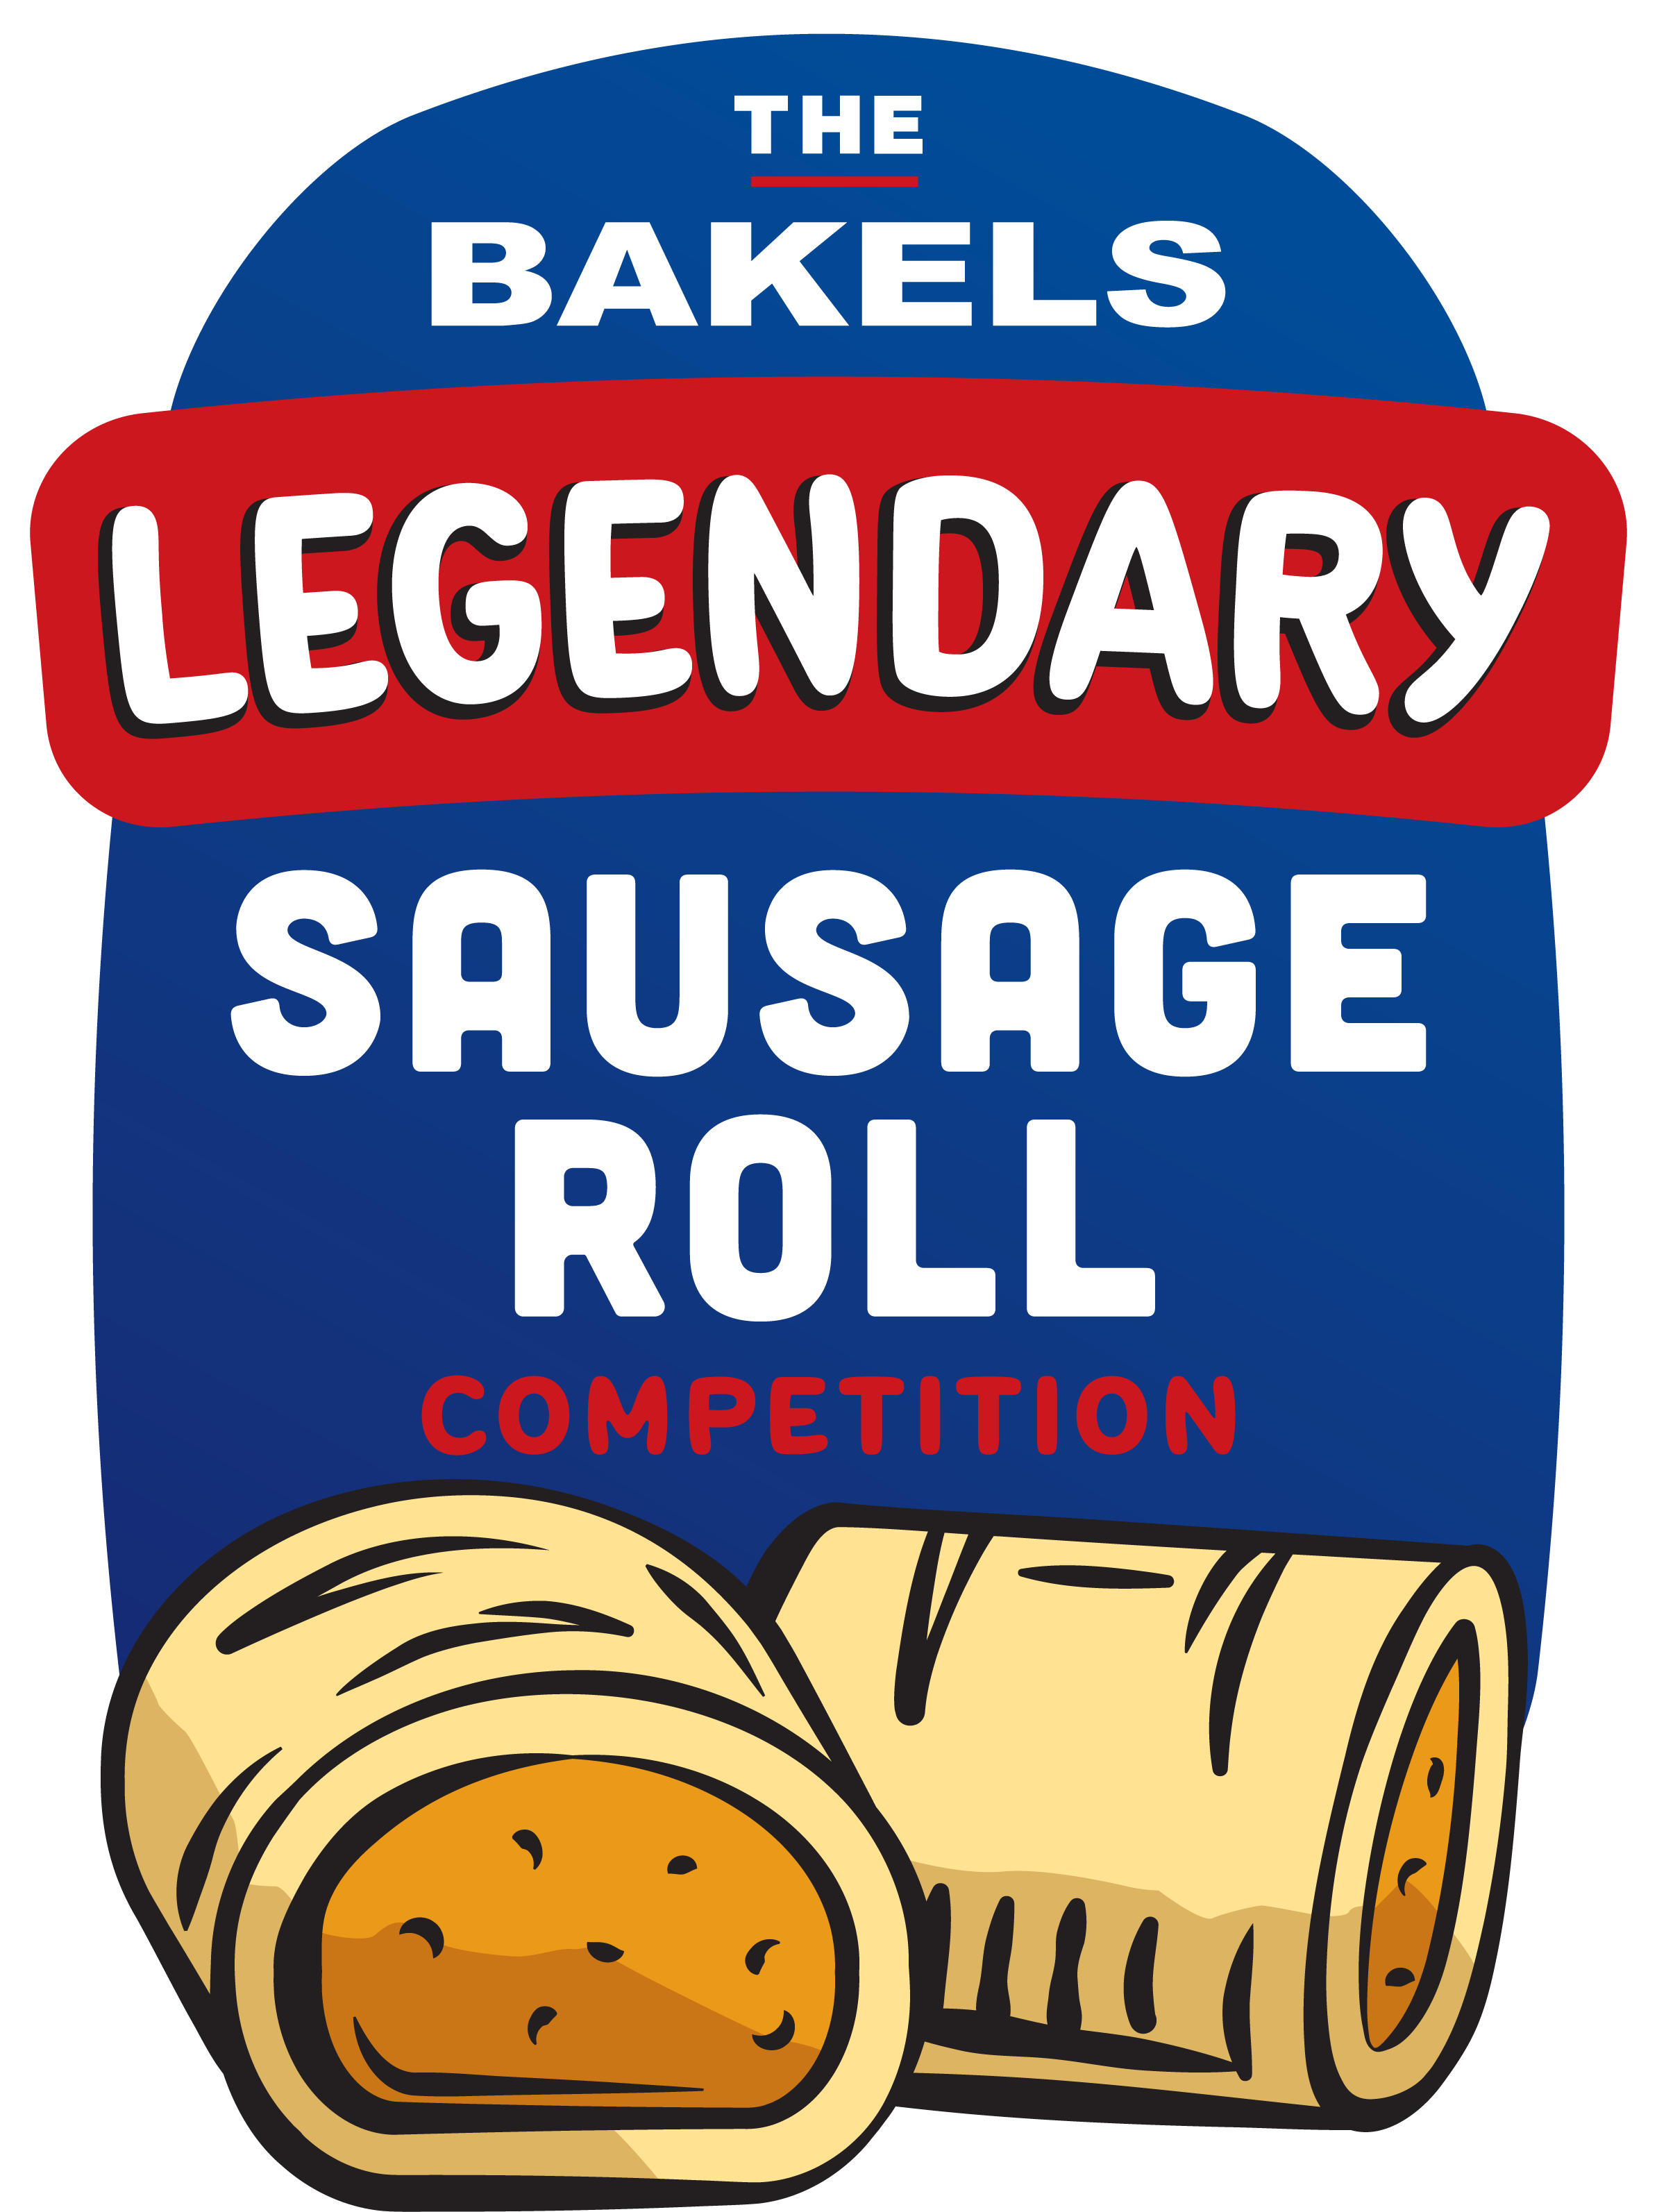 Sausage-roll-logo